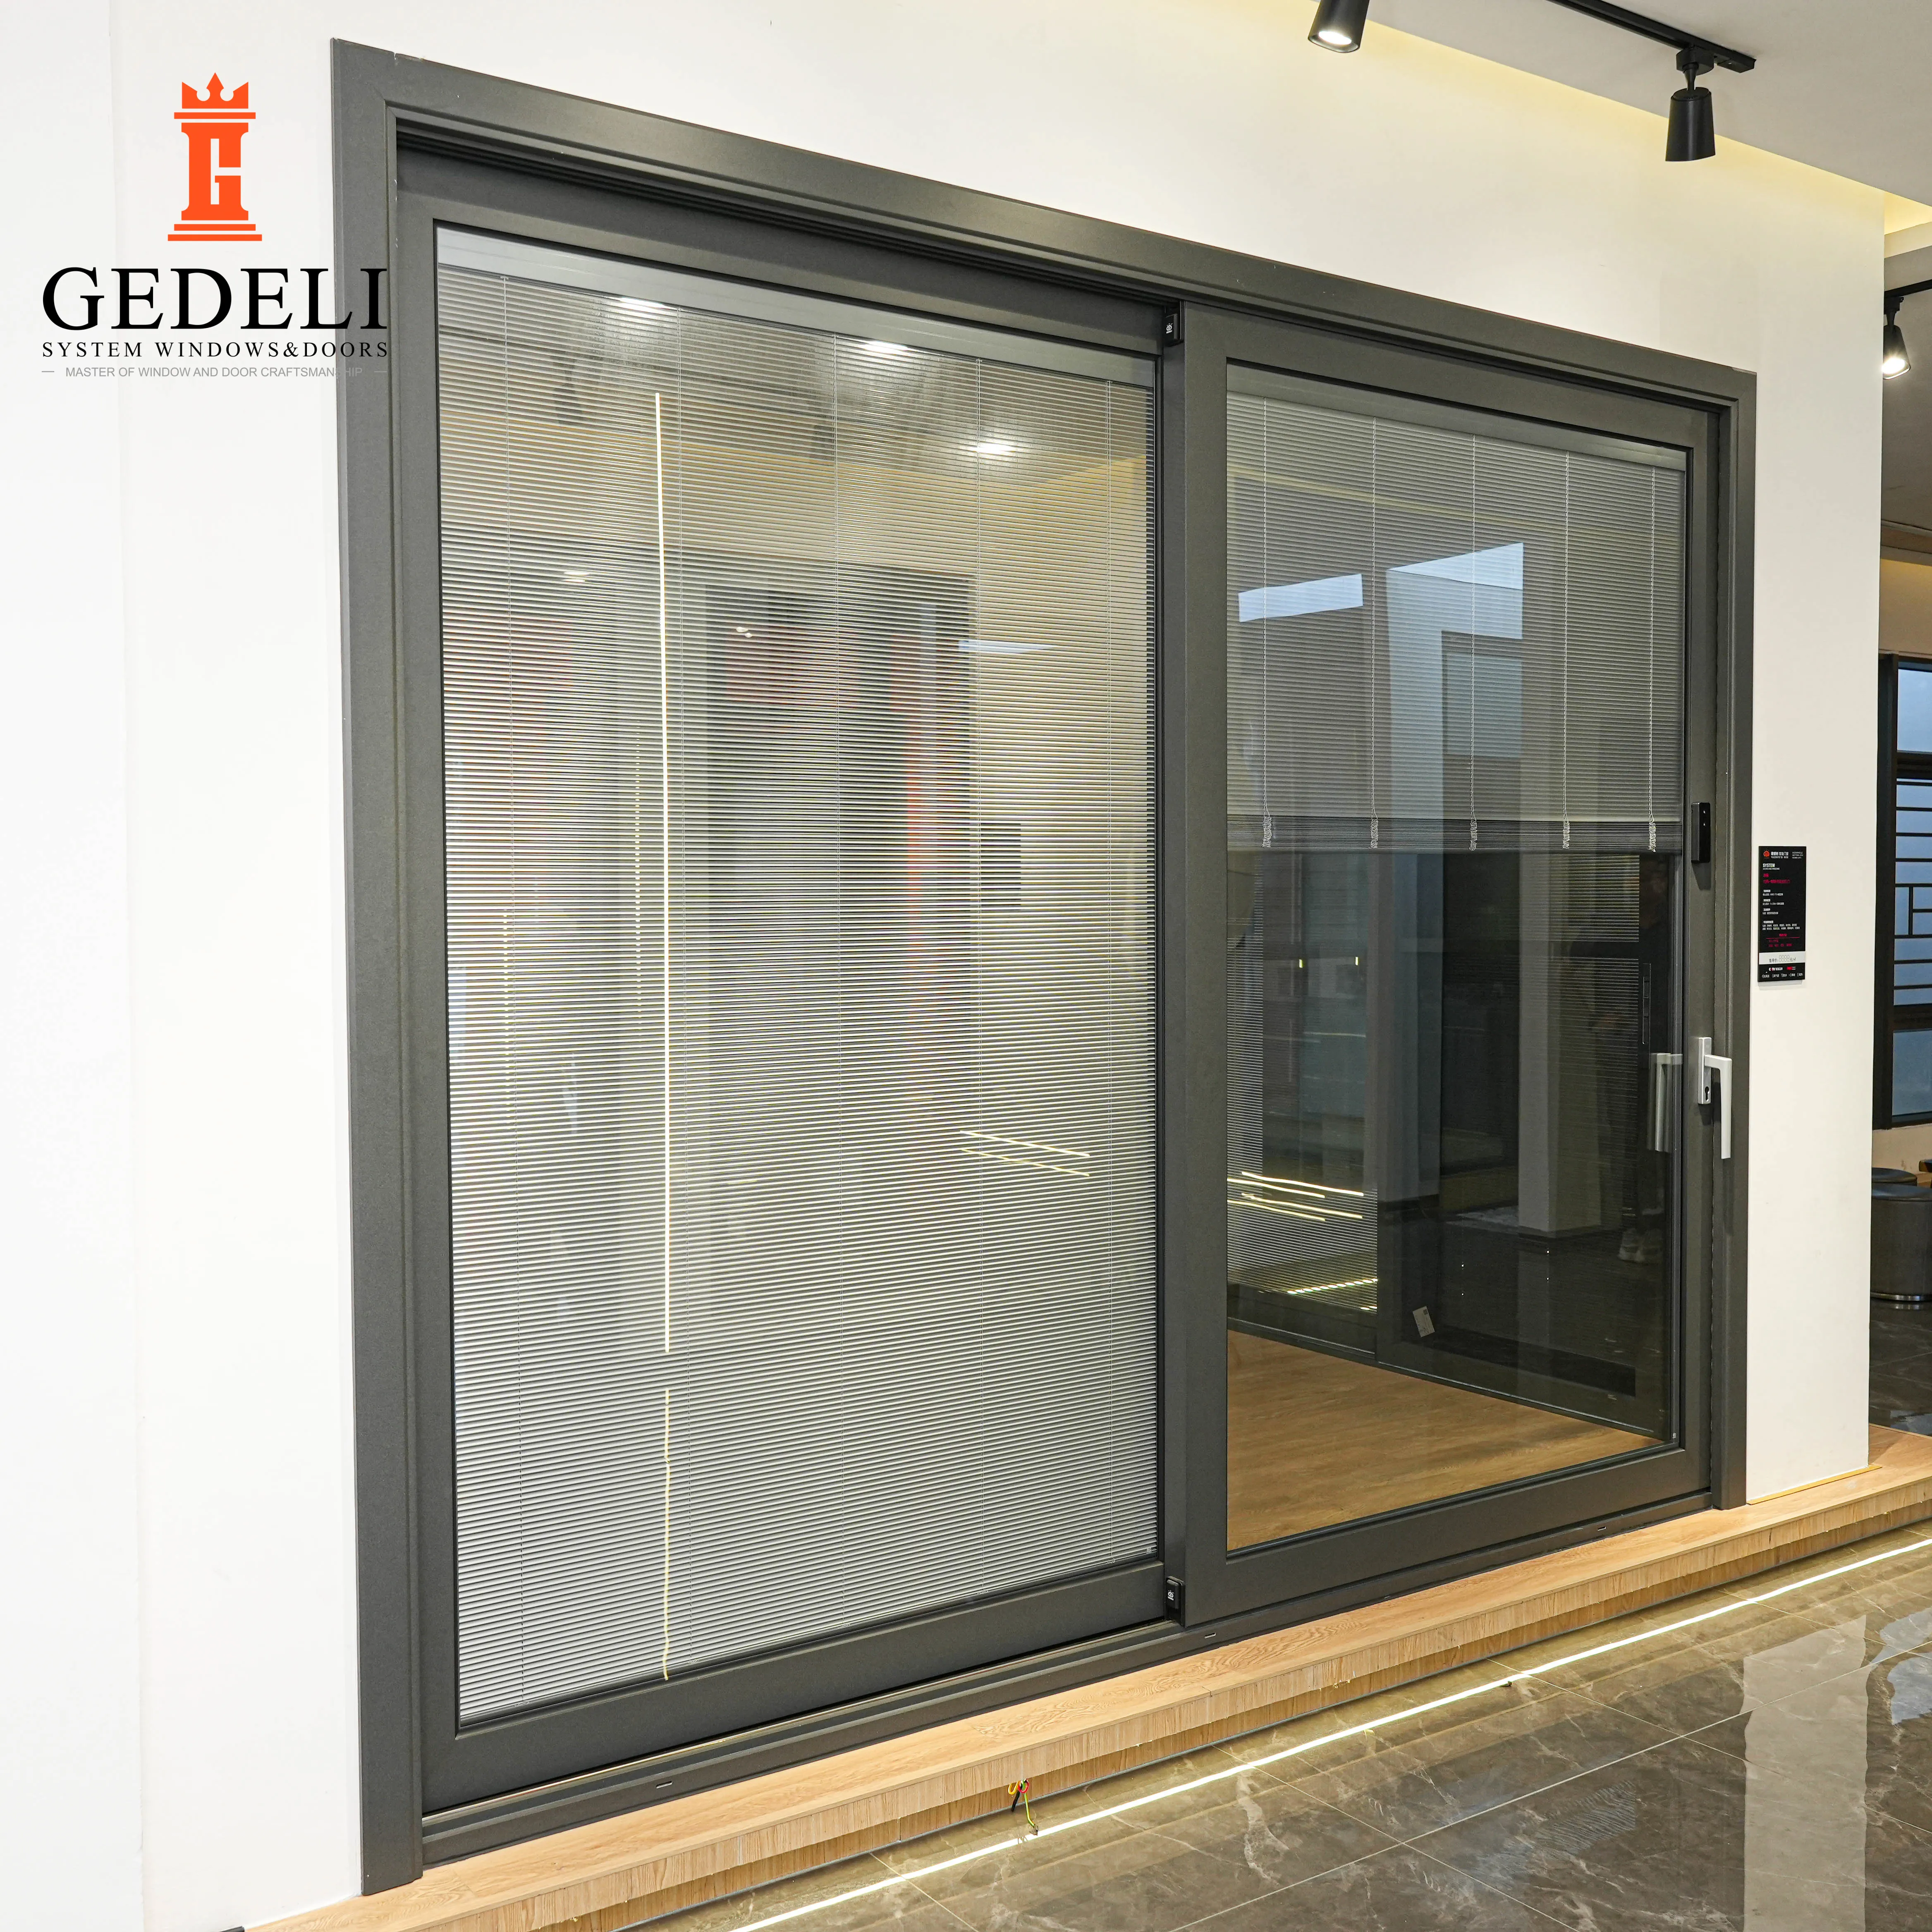 GWDELI portas deslizantes de alumínio duplo vidro temperado porta deslizante de alta qualidade com eficiência energética